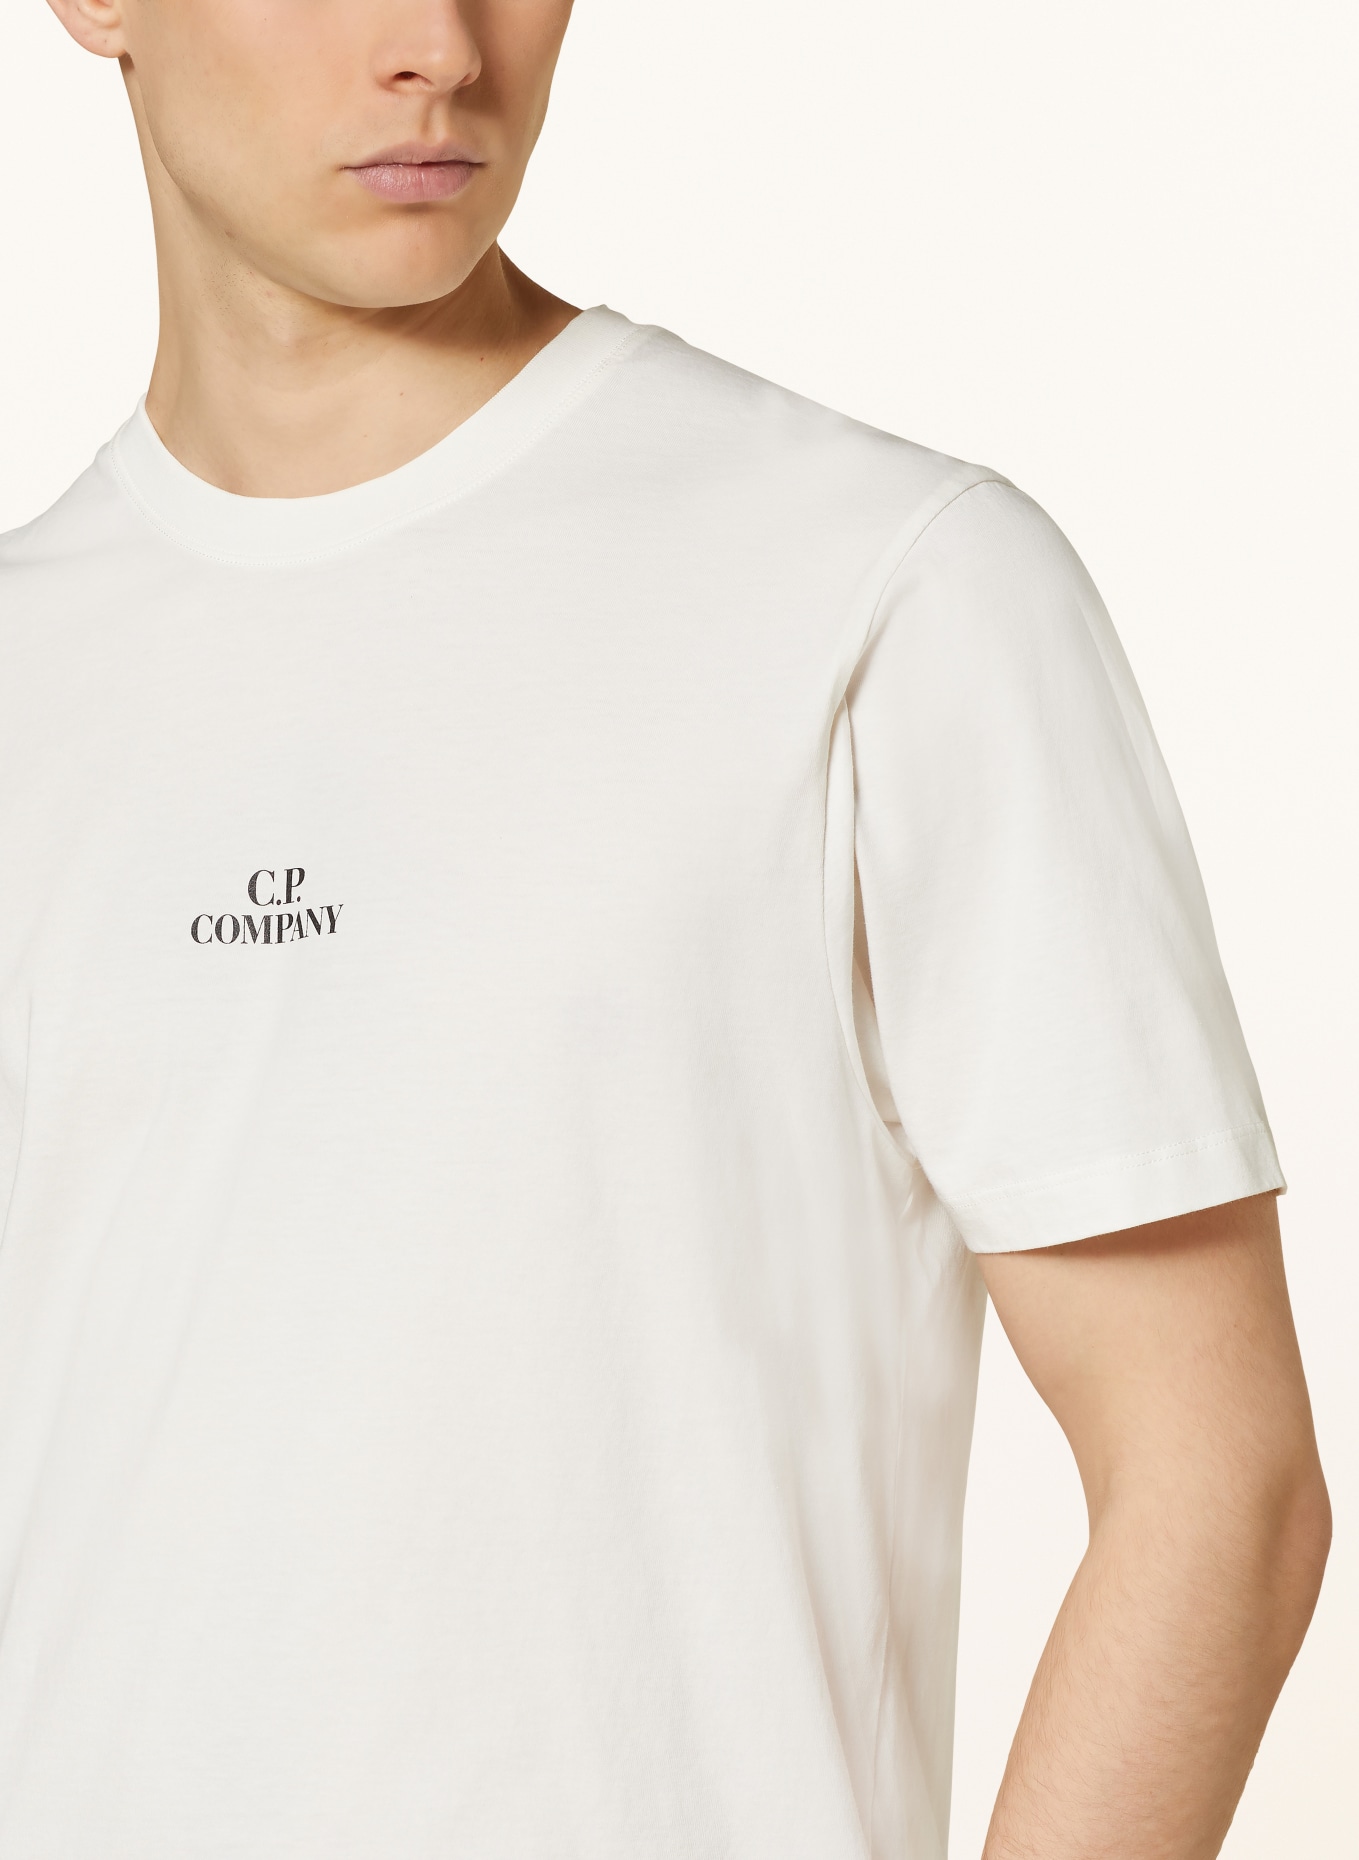 C.P. COMPANY T-Shirt, Farbe: WEISS/ DUNKELGRAU/ HELLGRAU (Bild 4)